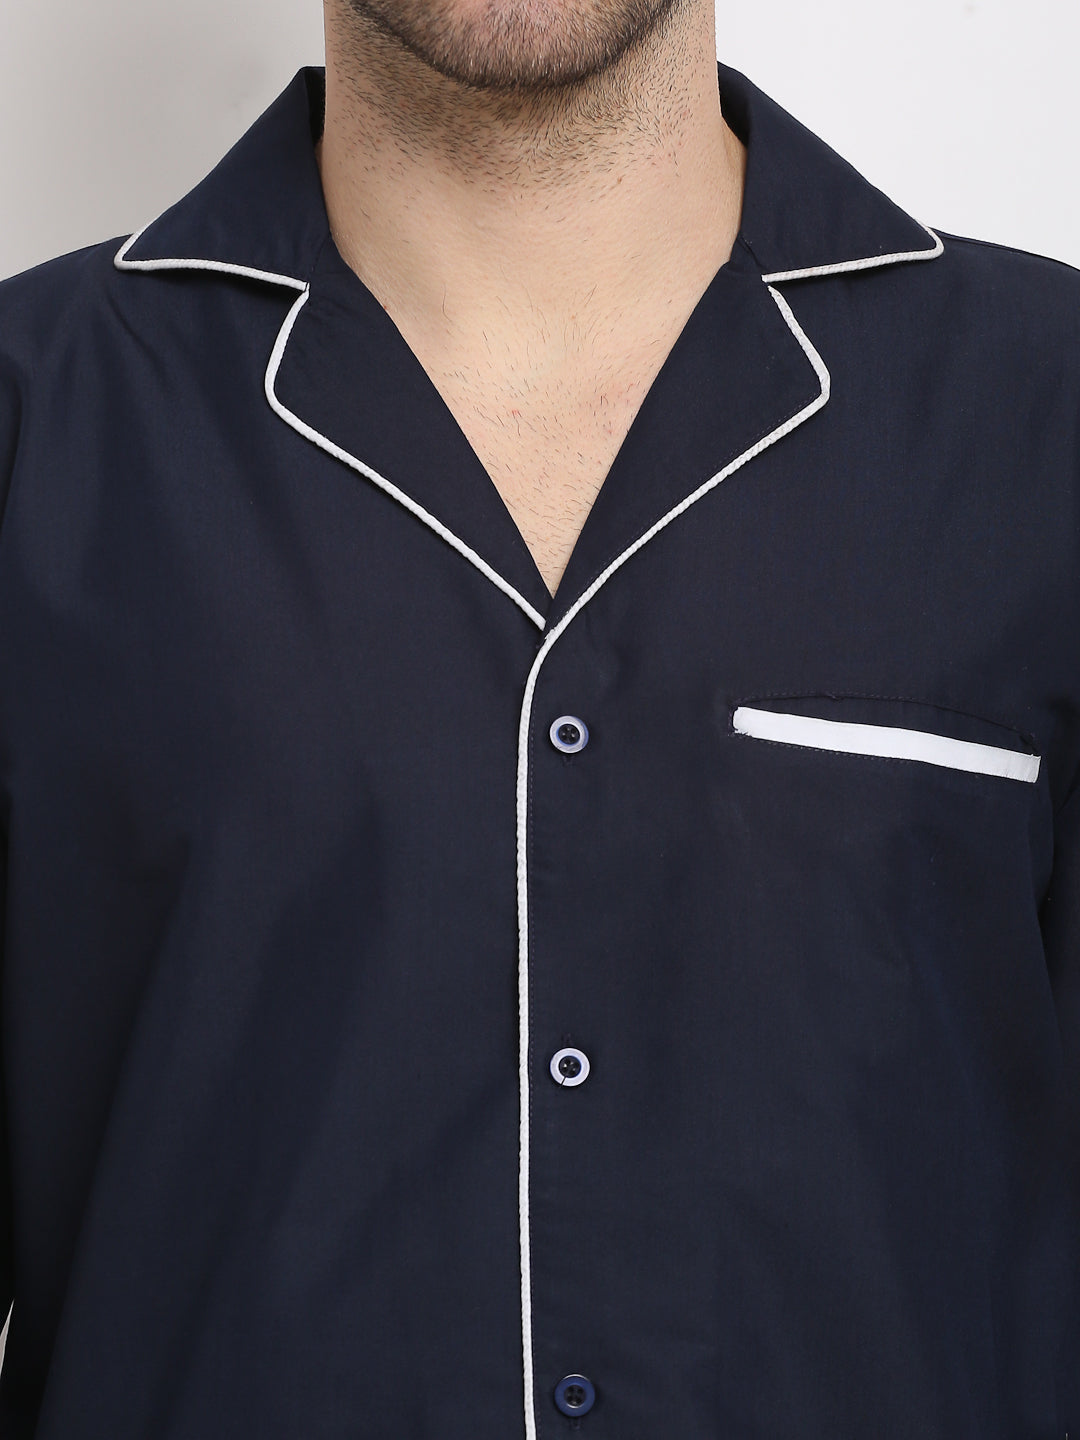 Men's Navy Cotton Solid Night Suits ( GNS 003Navy ) - Jainish